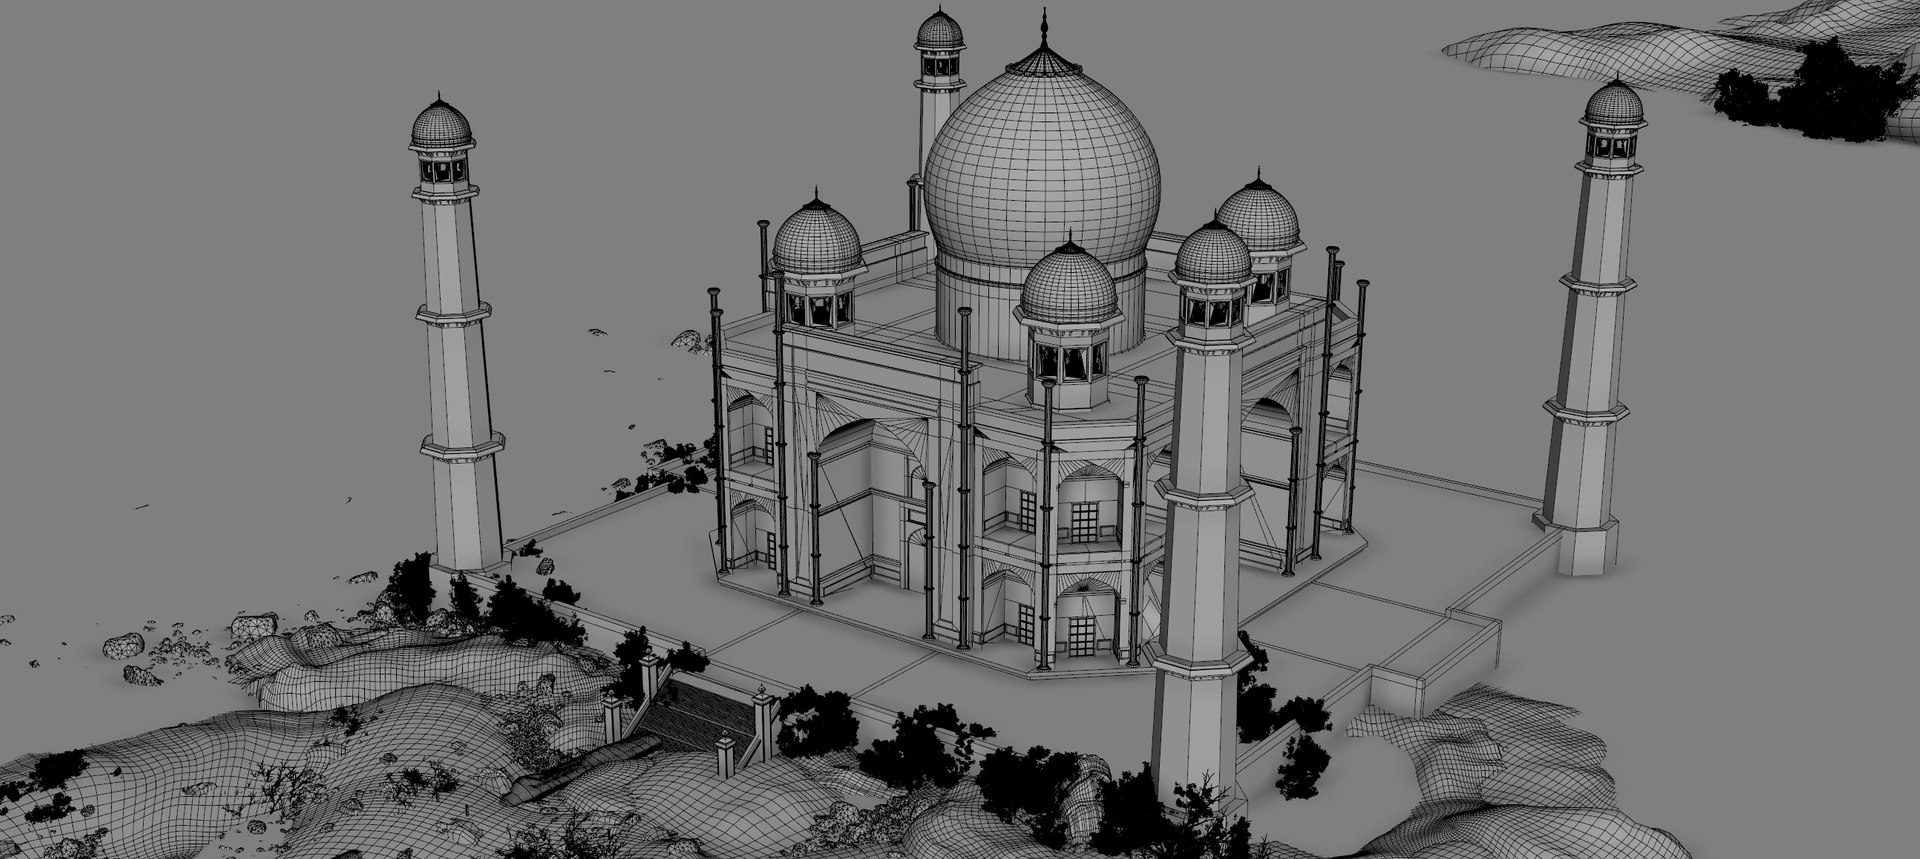 Laser Cut Taj Mahal 3D Model DXF File Free Download - 3axis.co